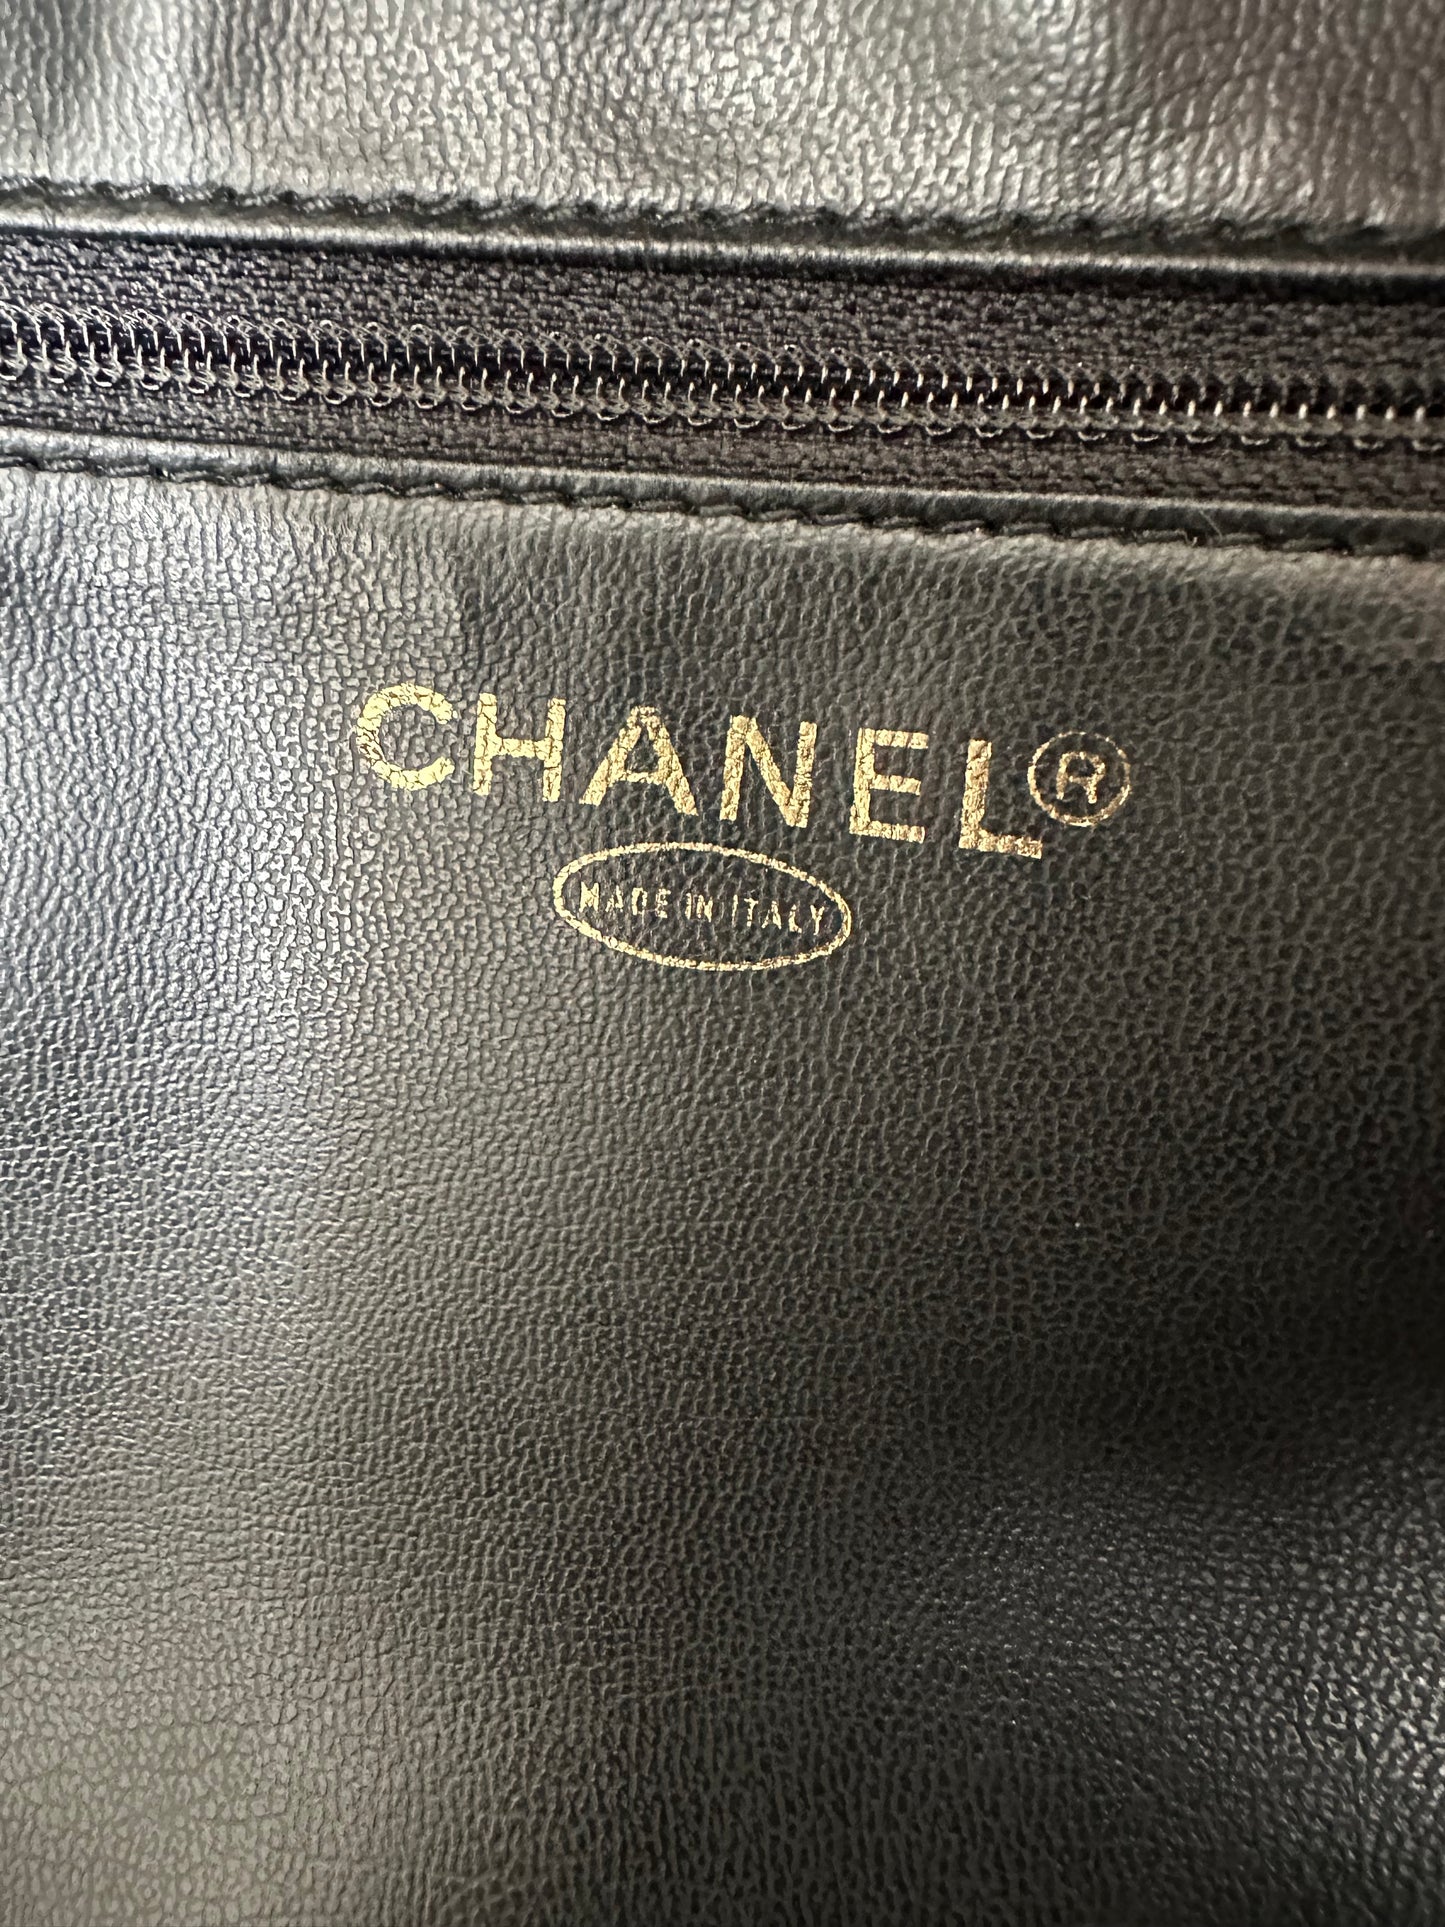 Chanel Vanity vintage